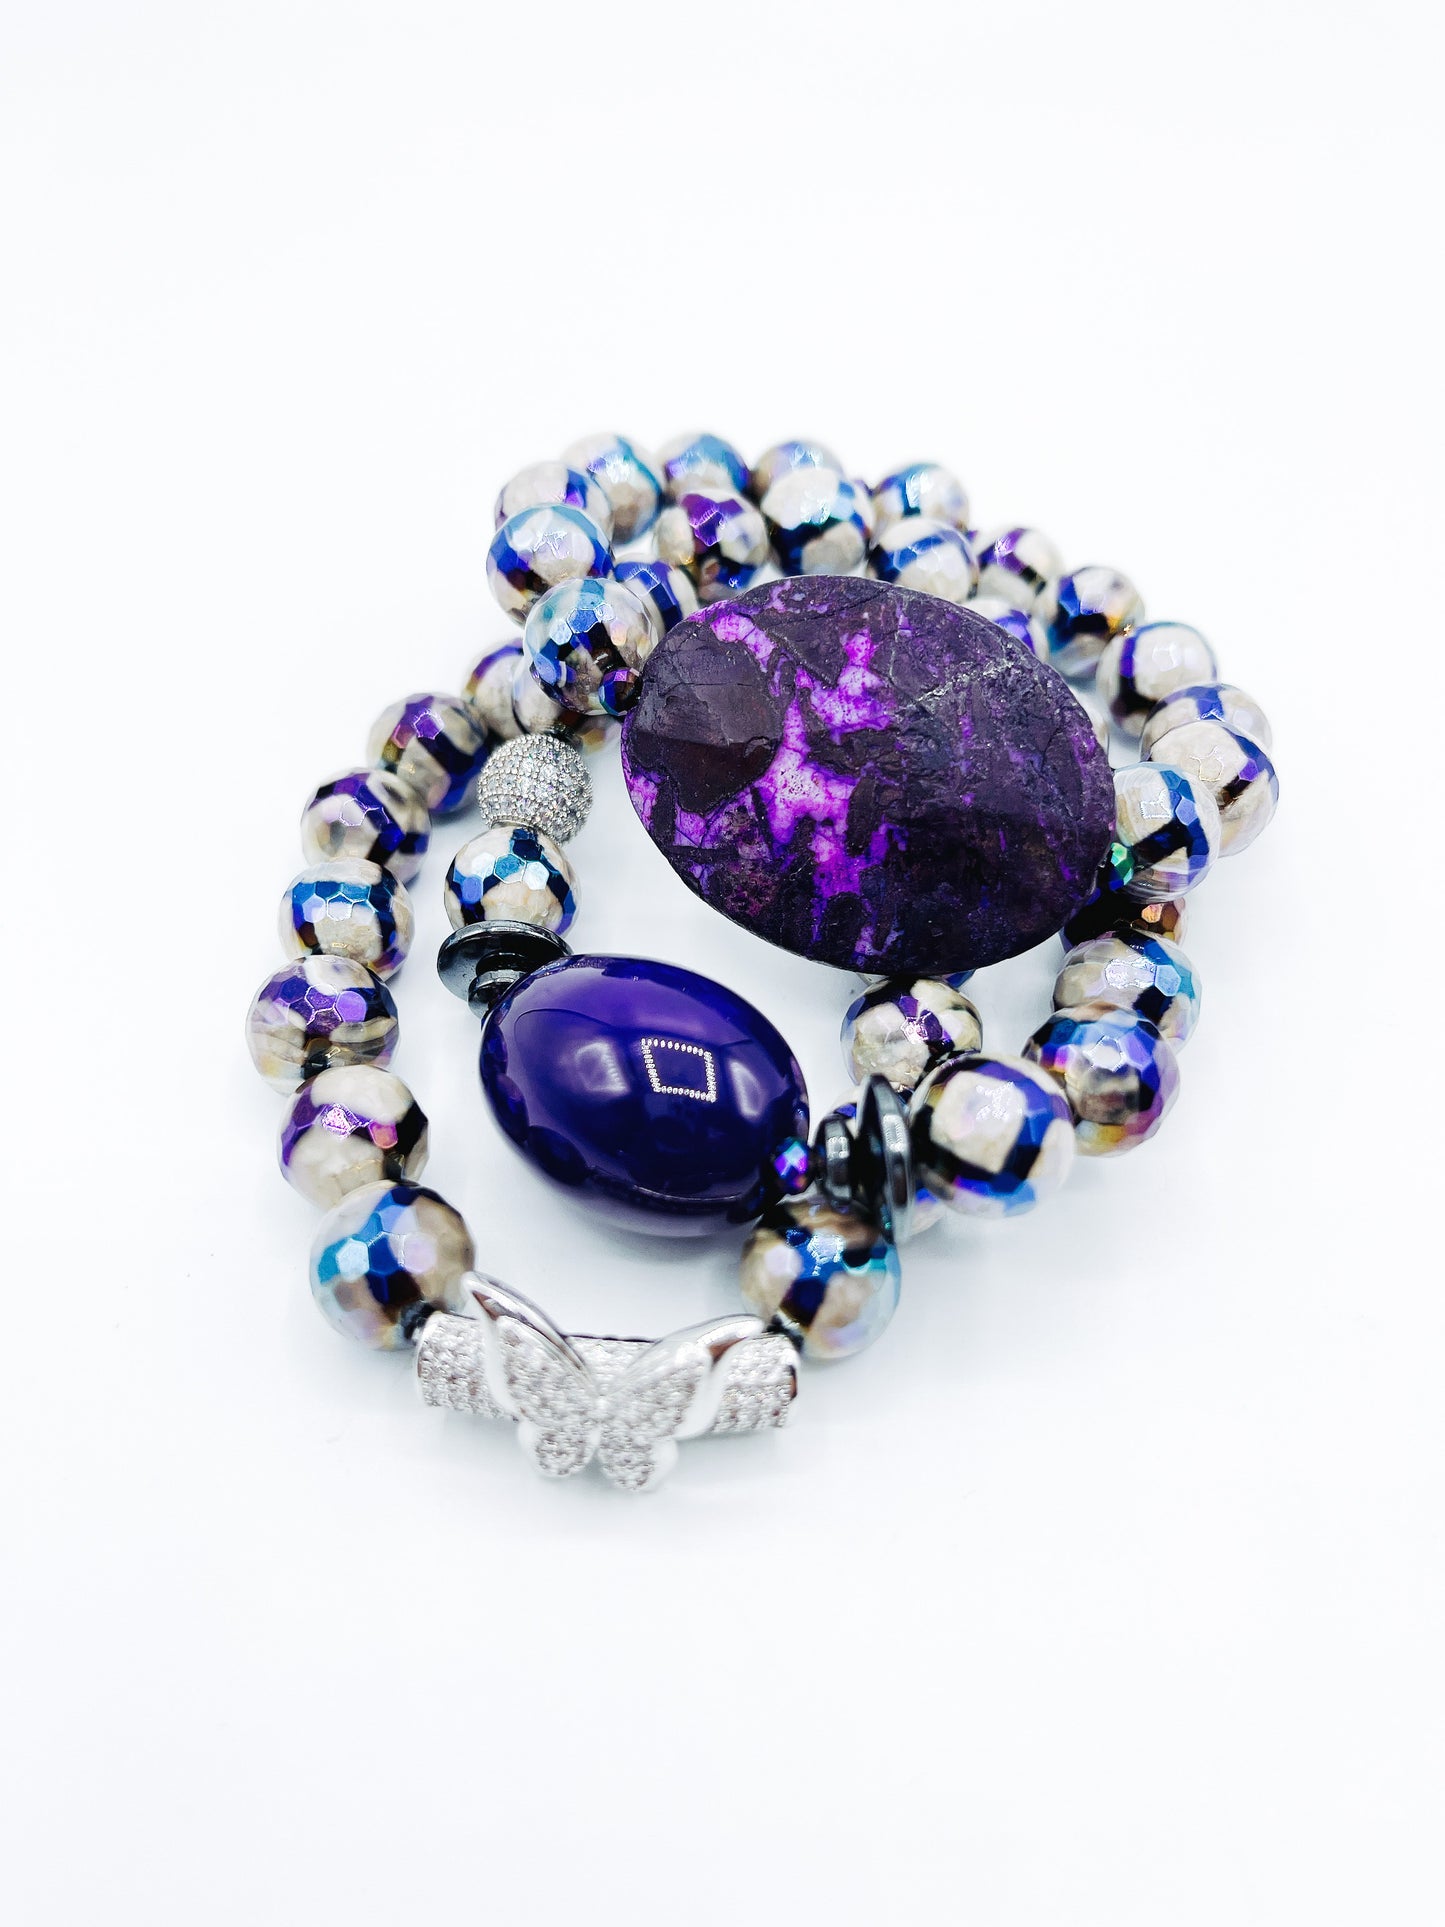 Her Dreams - Gemstone Bracelet